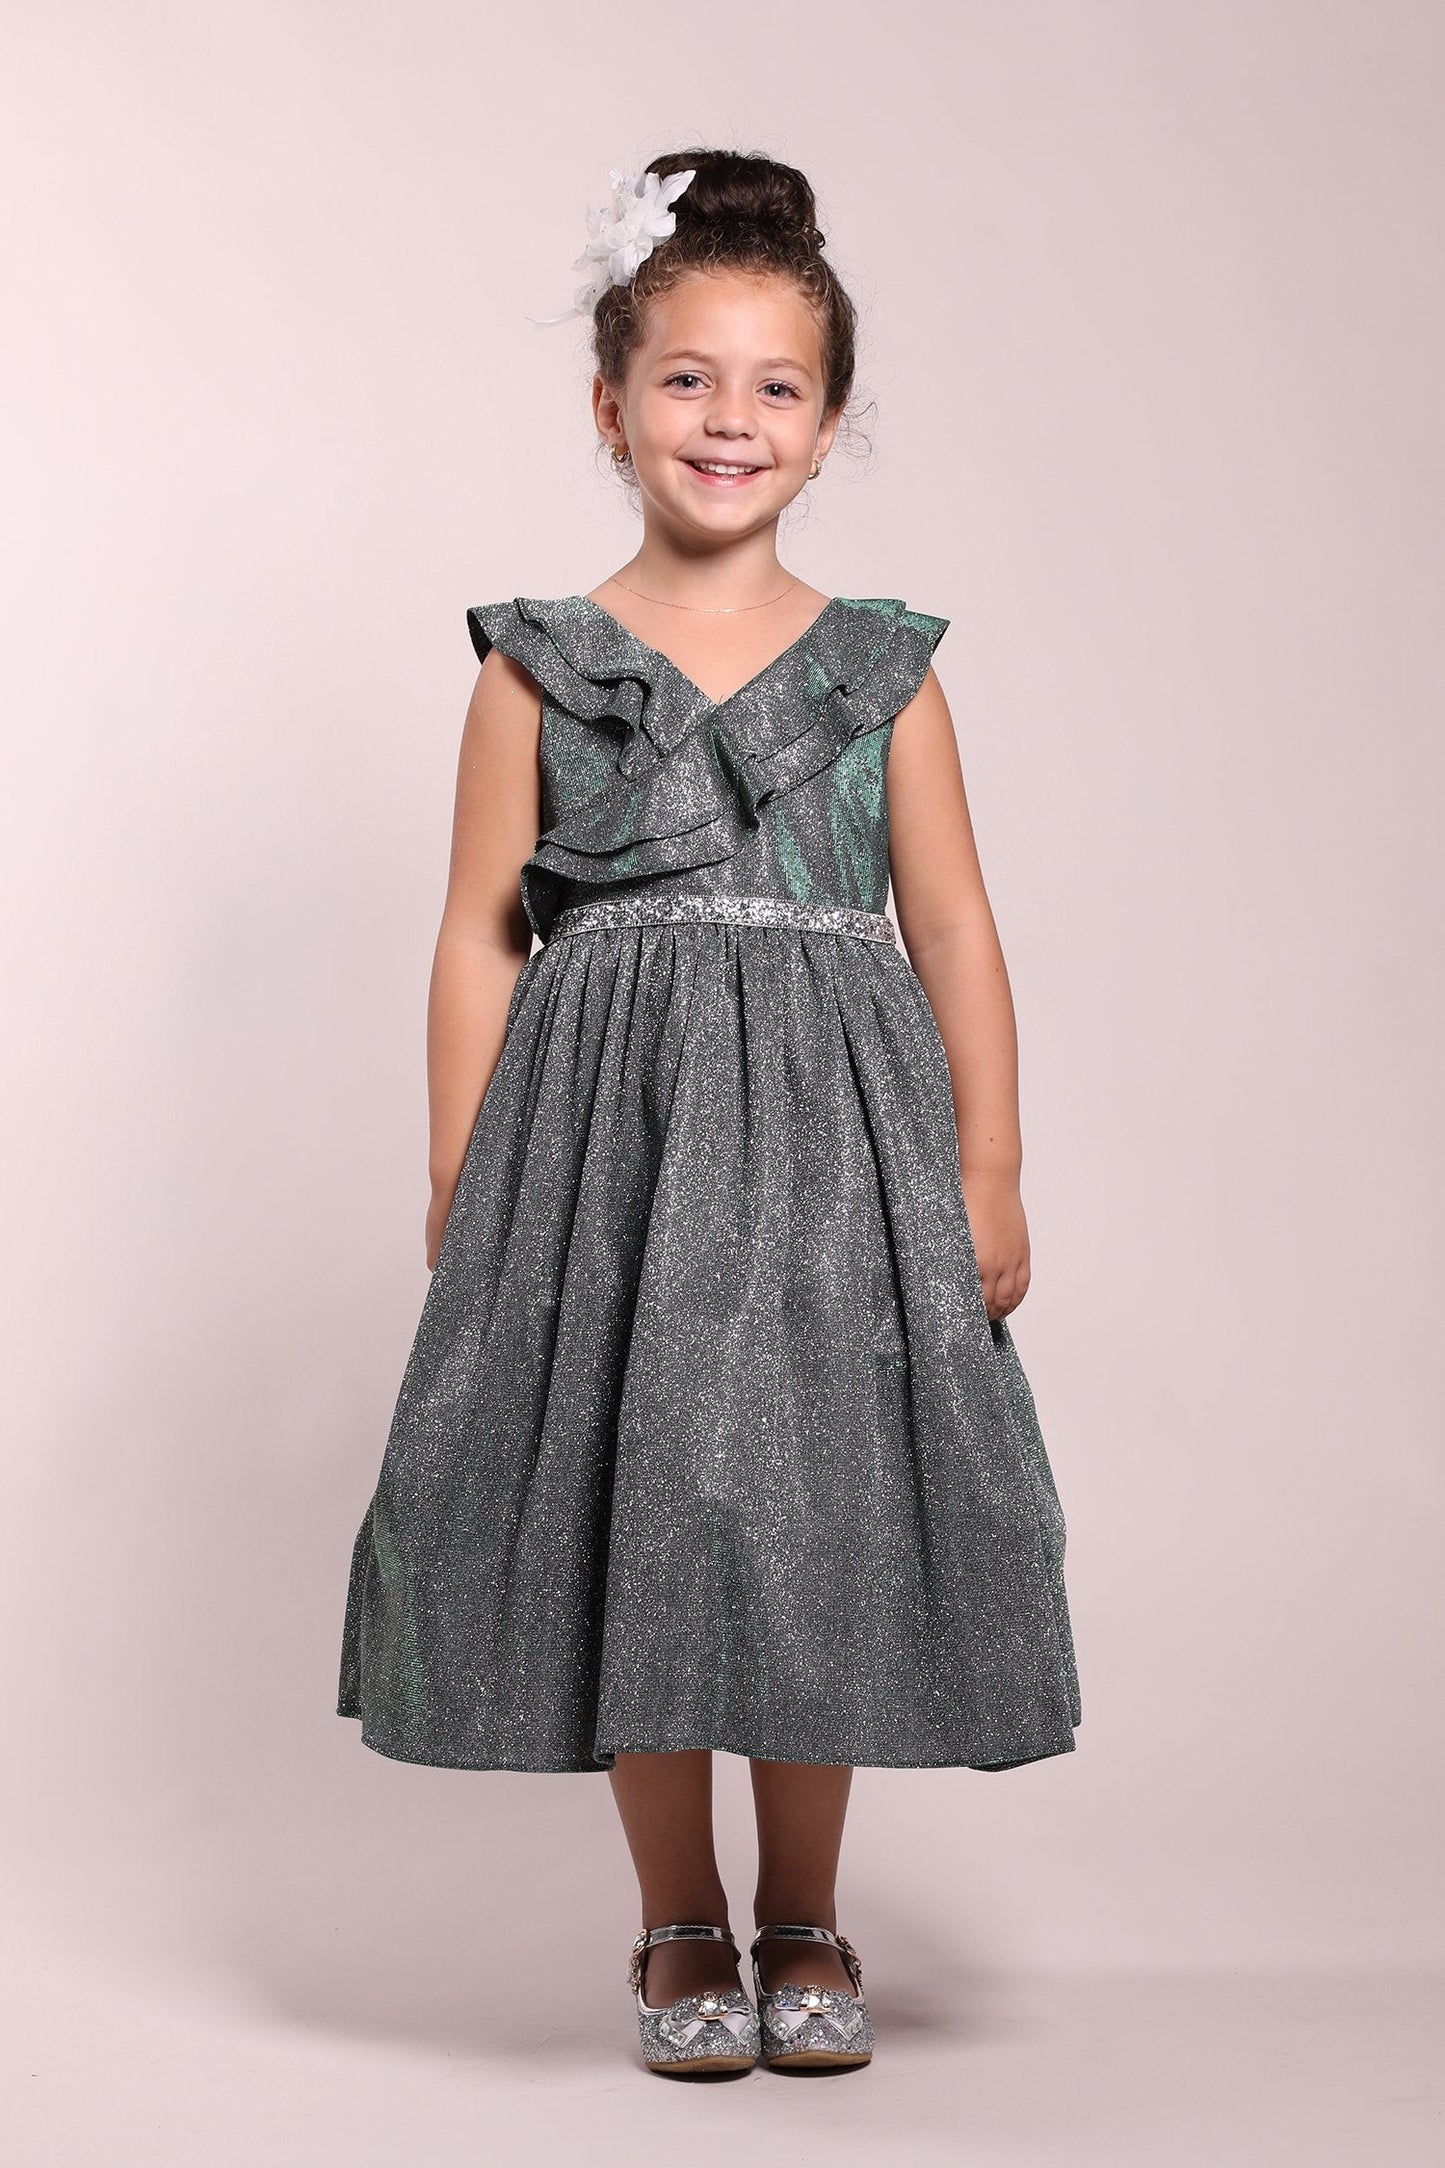 Sparkly Ruffle Plus Size Girl Dress